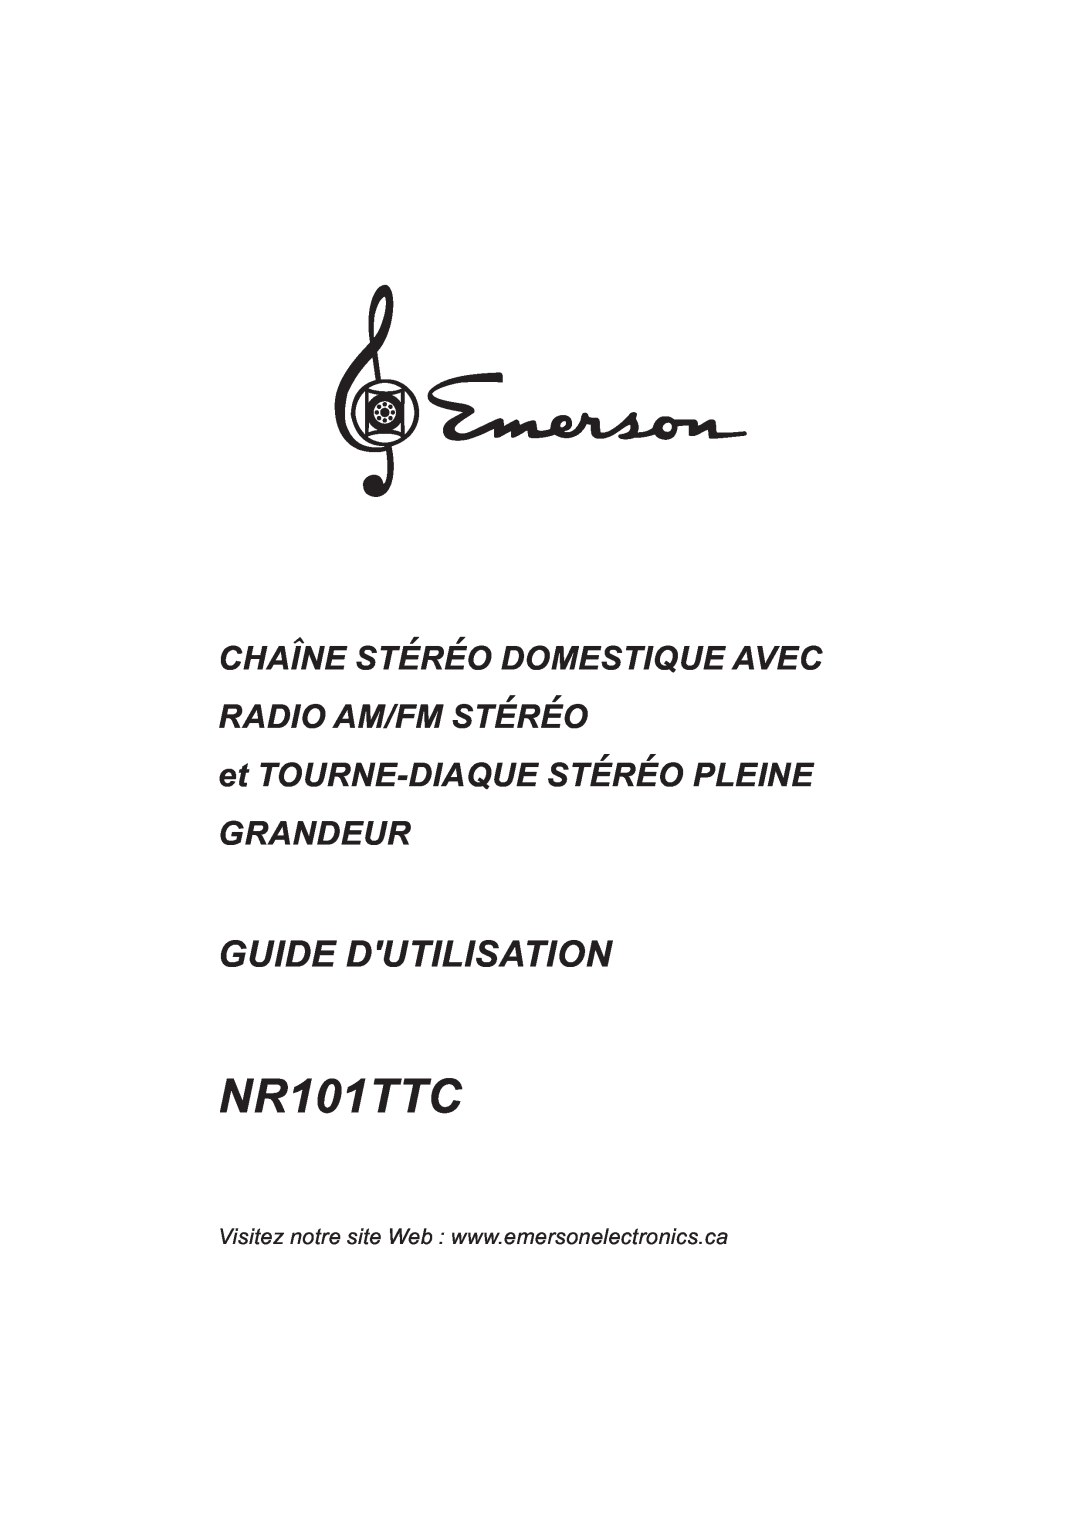 Emerson NR101TTC owner manual Guide Dutilisation, Chaine Stereo Domestique Avec Radio Am/Fm Stereo 